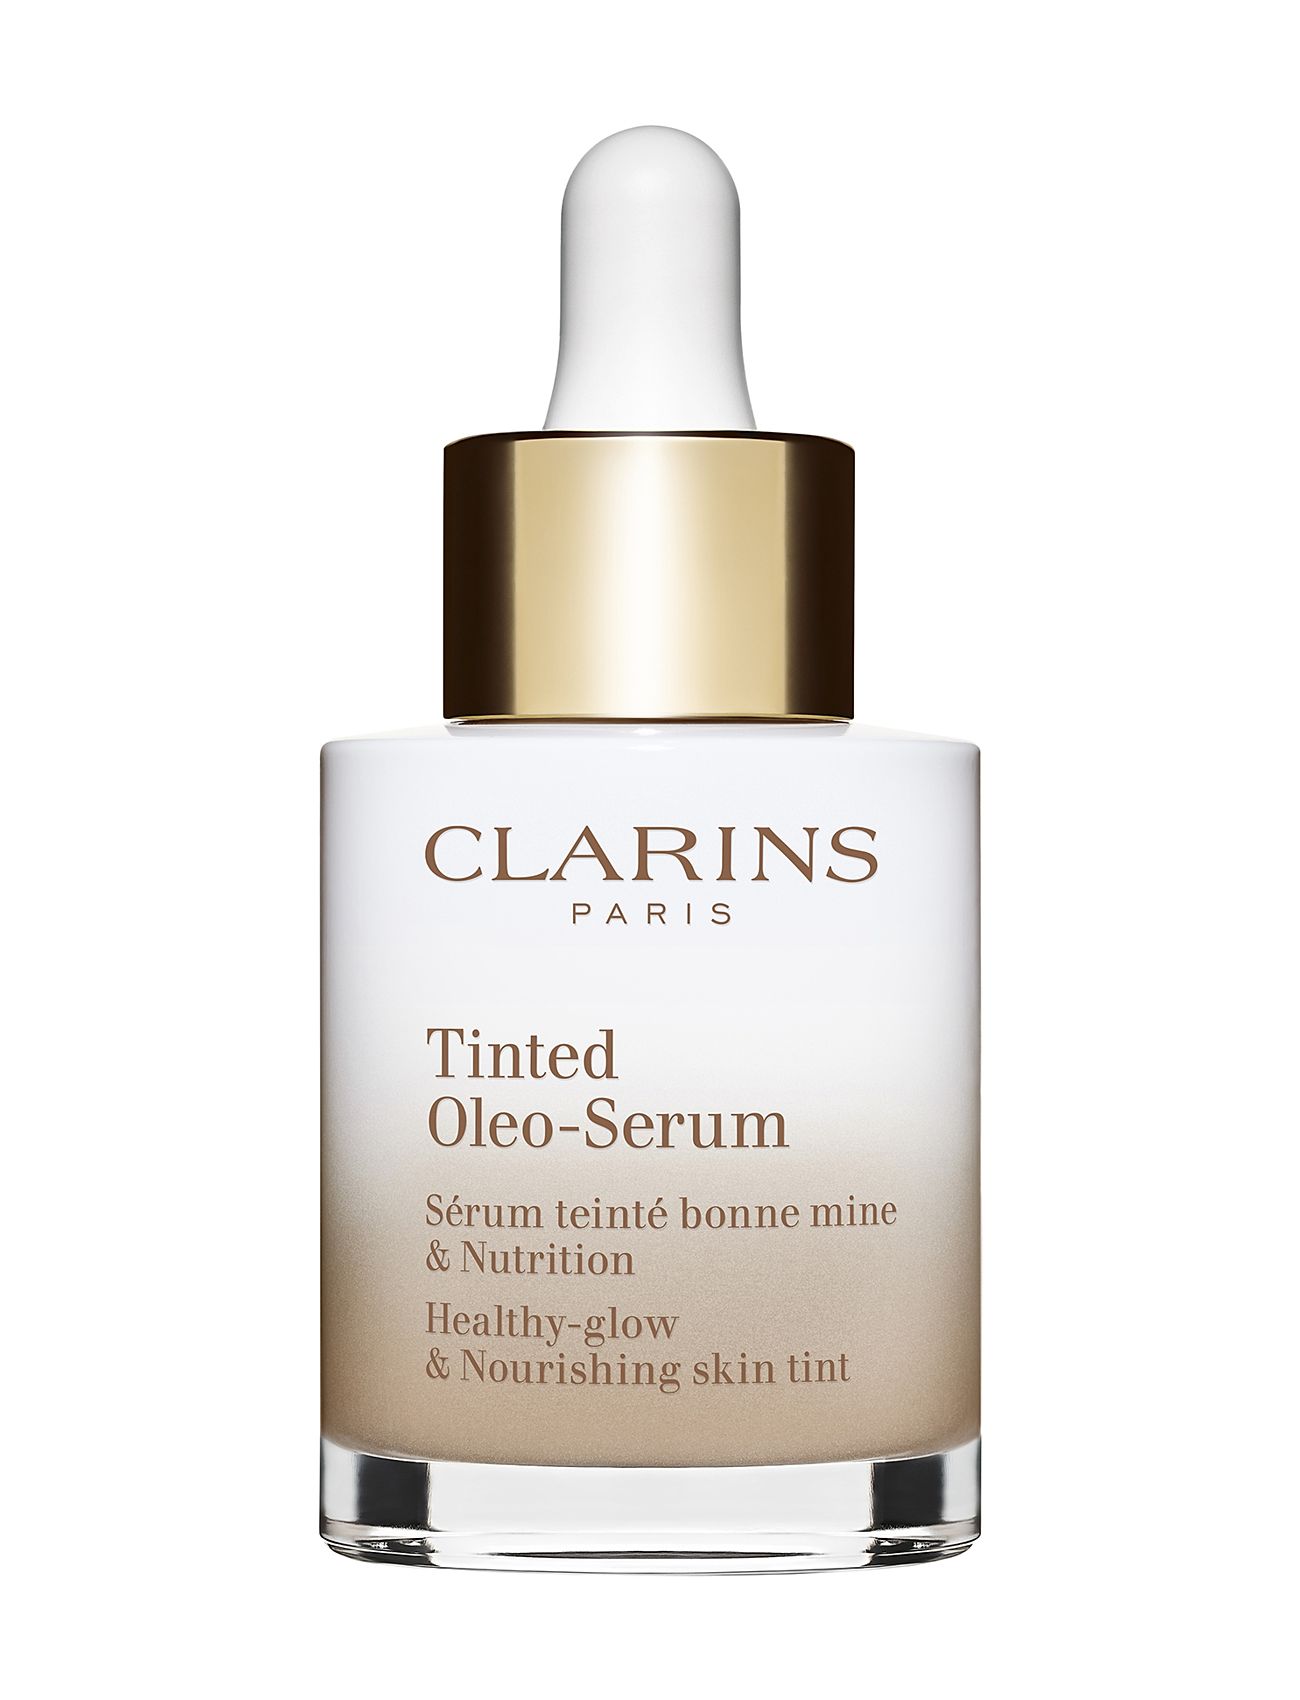 Tinted Oleo-Serum 01 Foundation Makeup Clarins